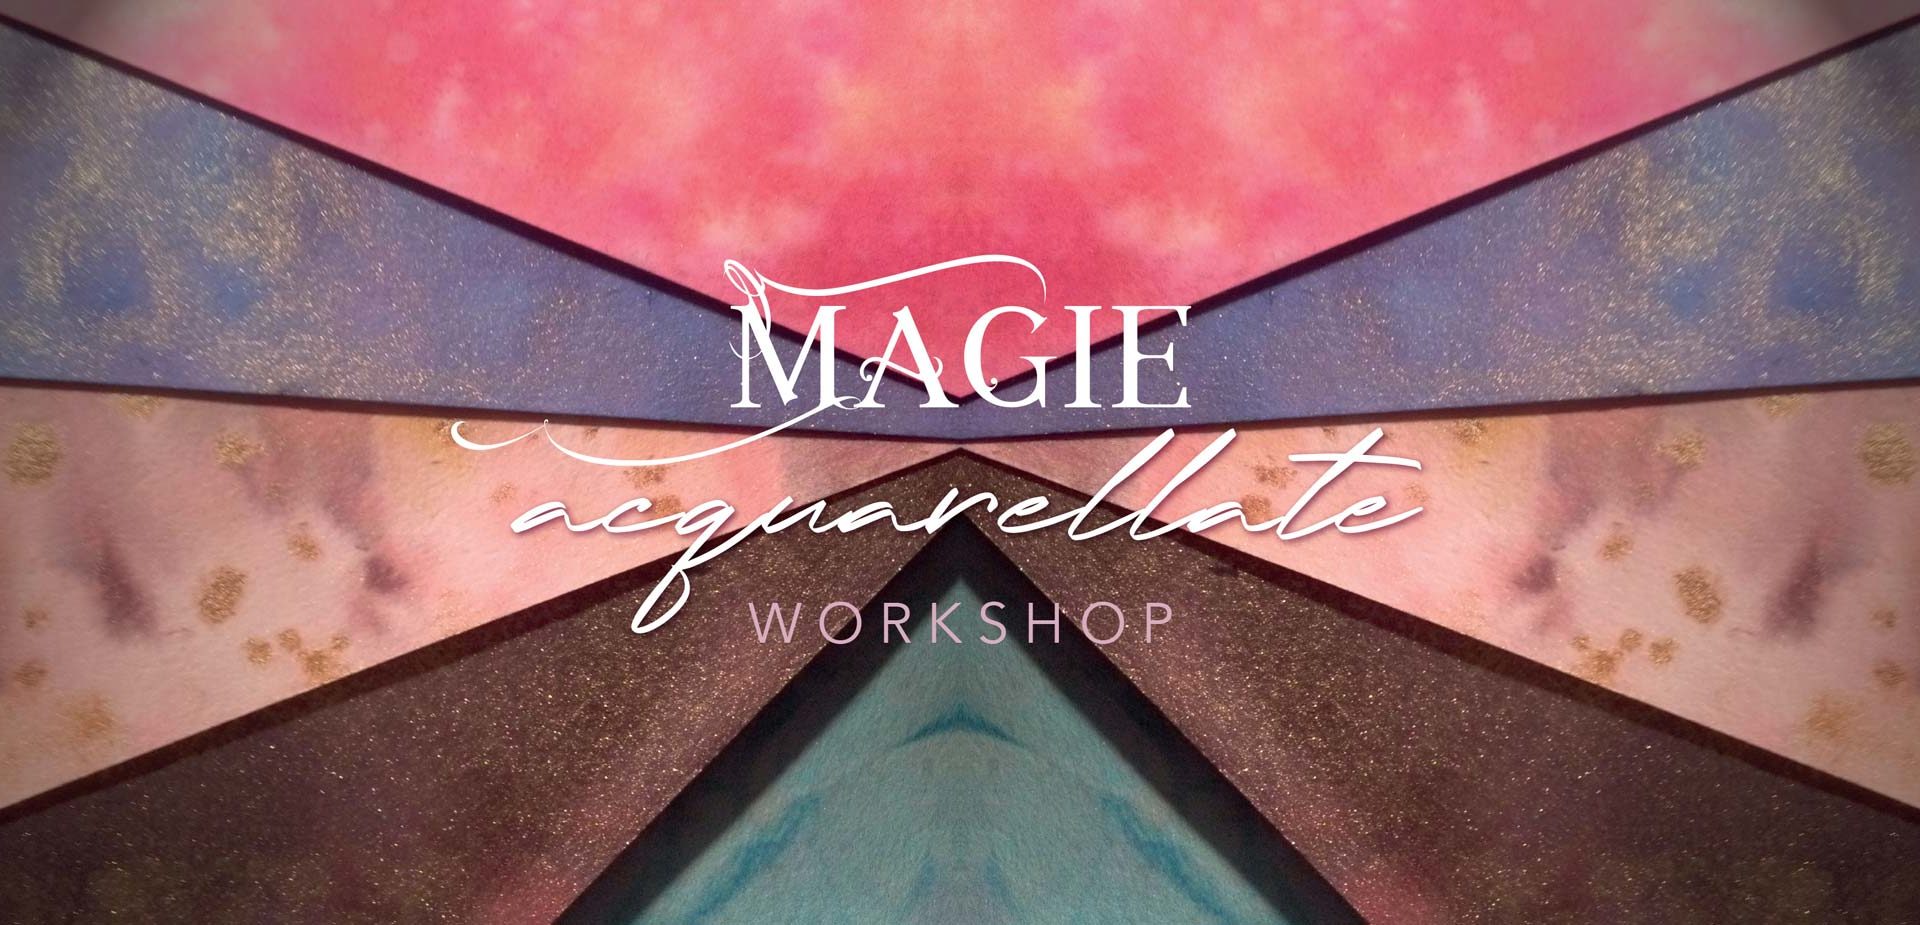 Magie acquarellate, Workshop